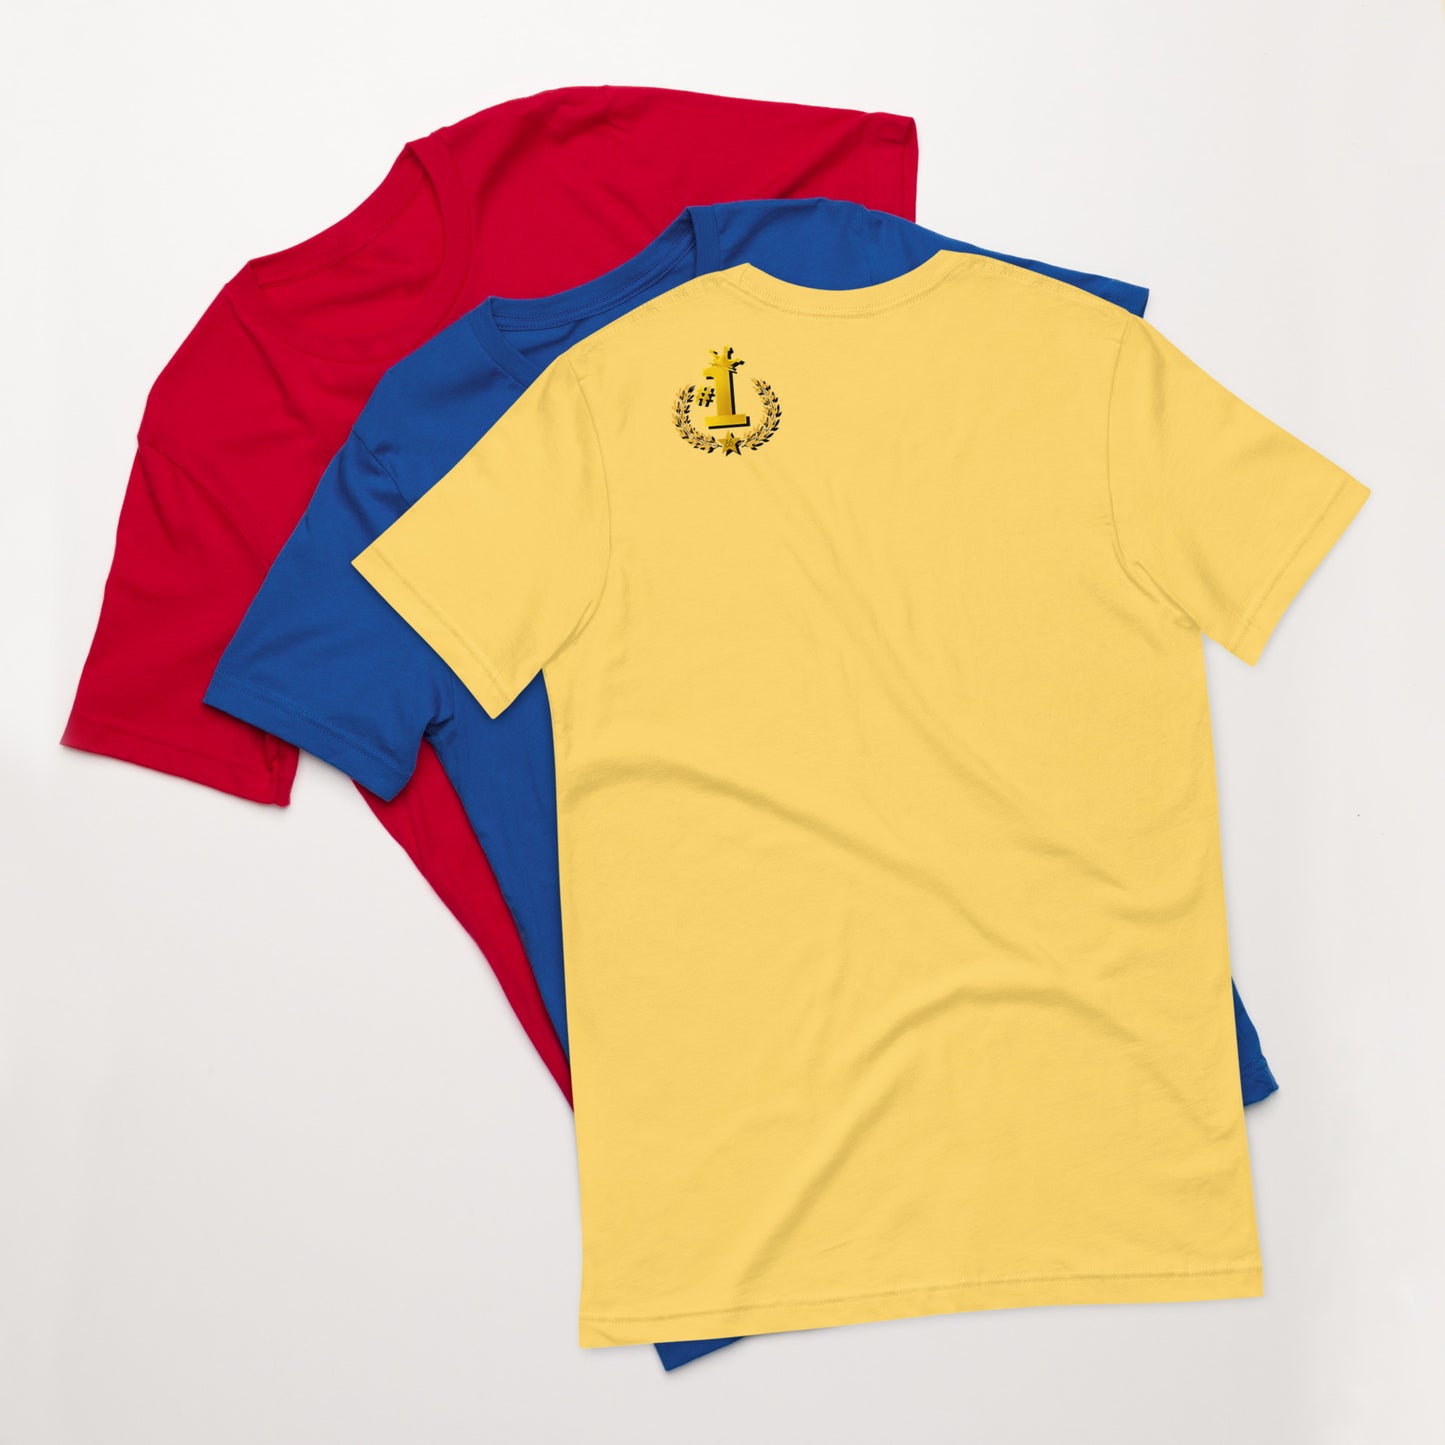 Sidow Sobrino's Making a Splash Unisex t-shirt Style IV